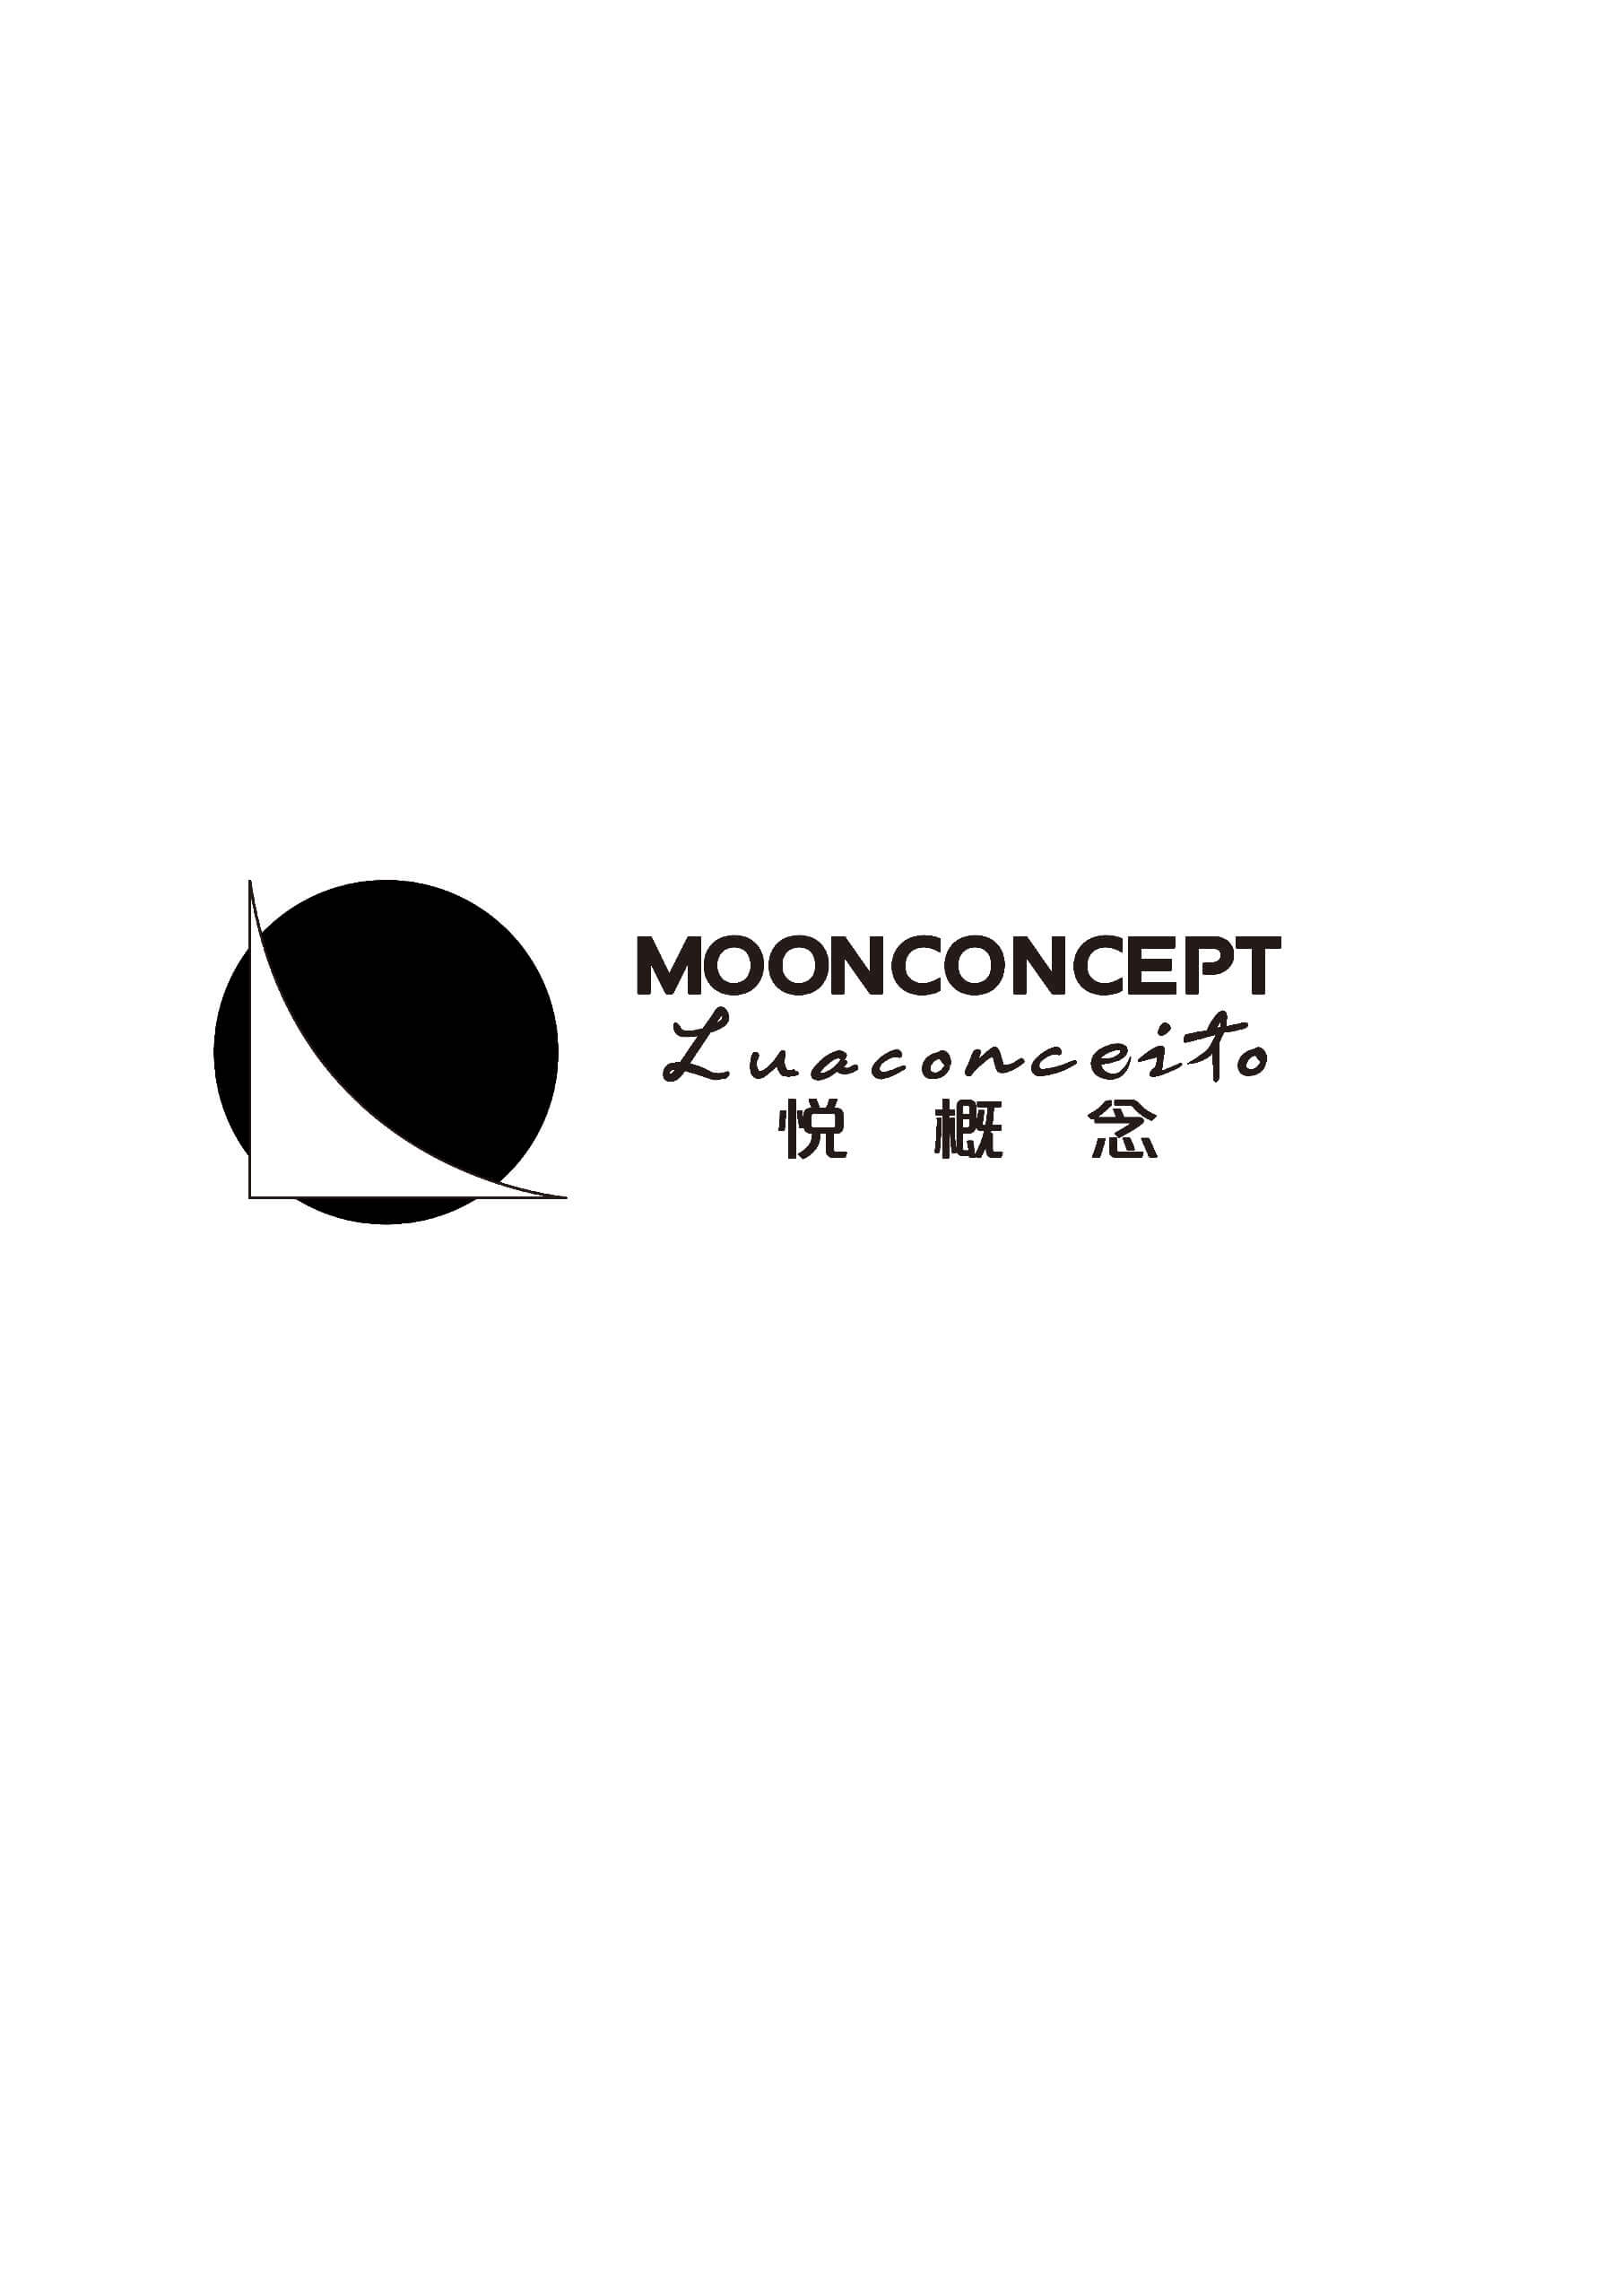 Moonconcept